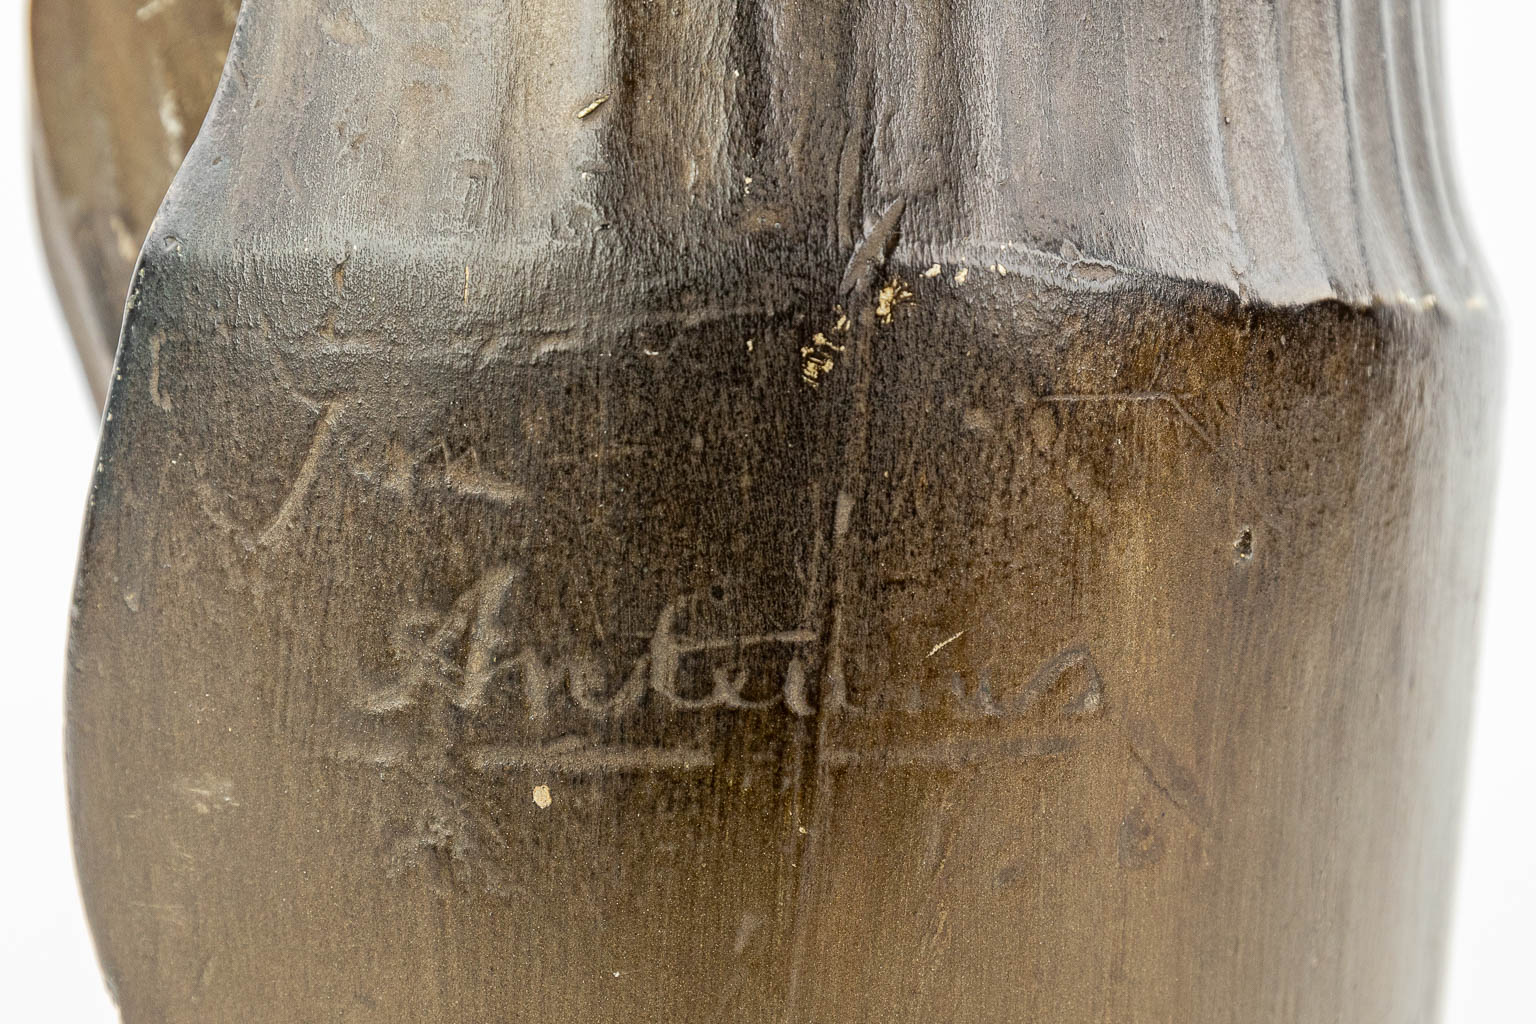 Jan ANTEUNIS (1896-1973) 'Christ' a bust made of plaster. (H:42cm)